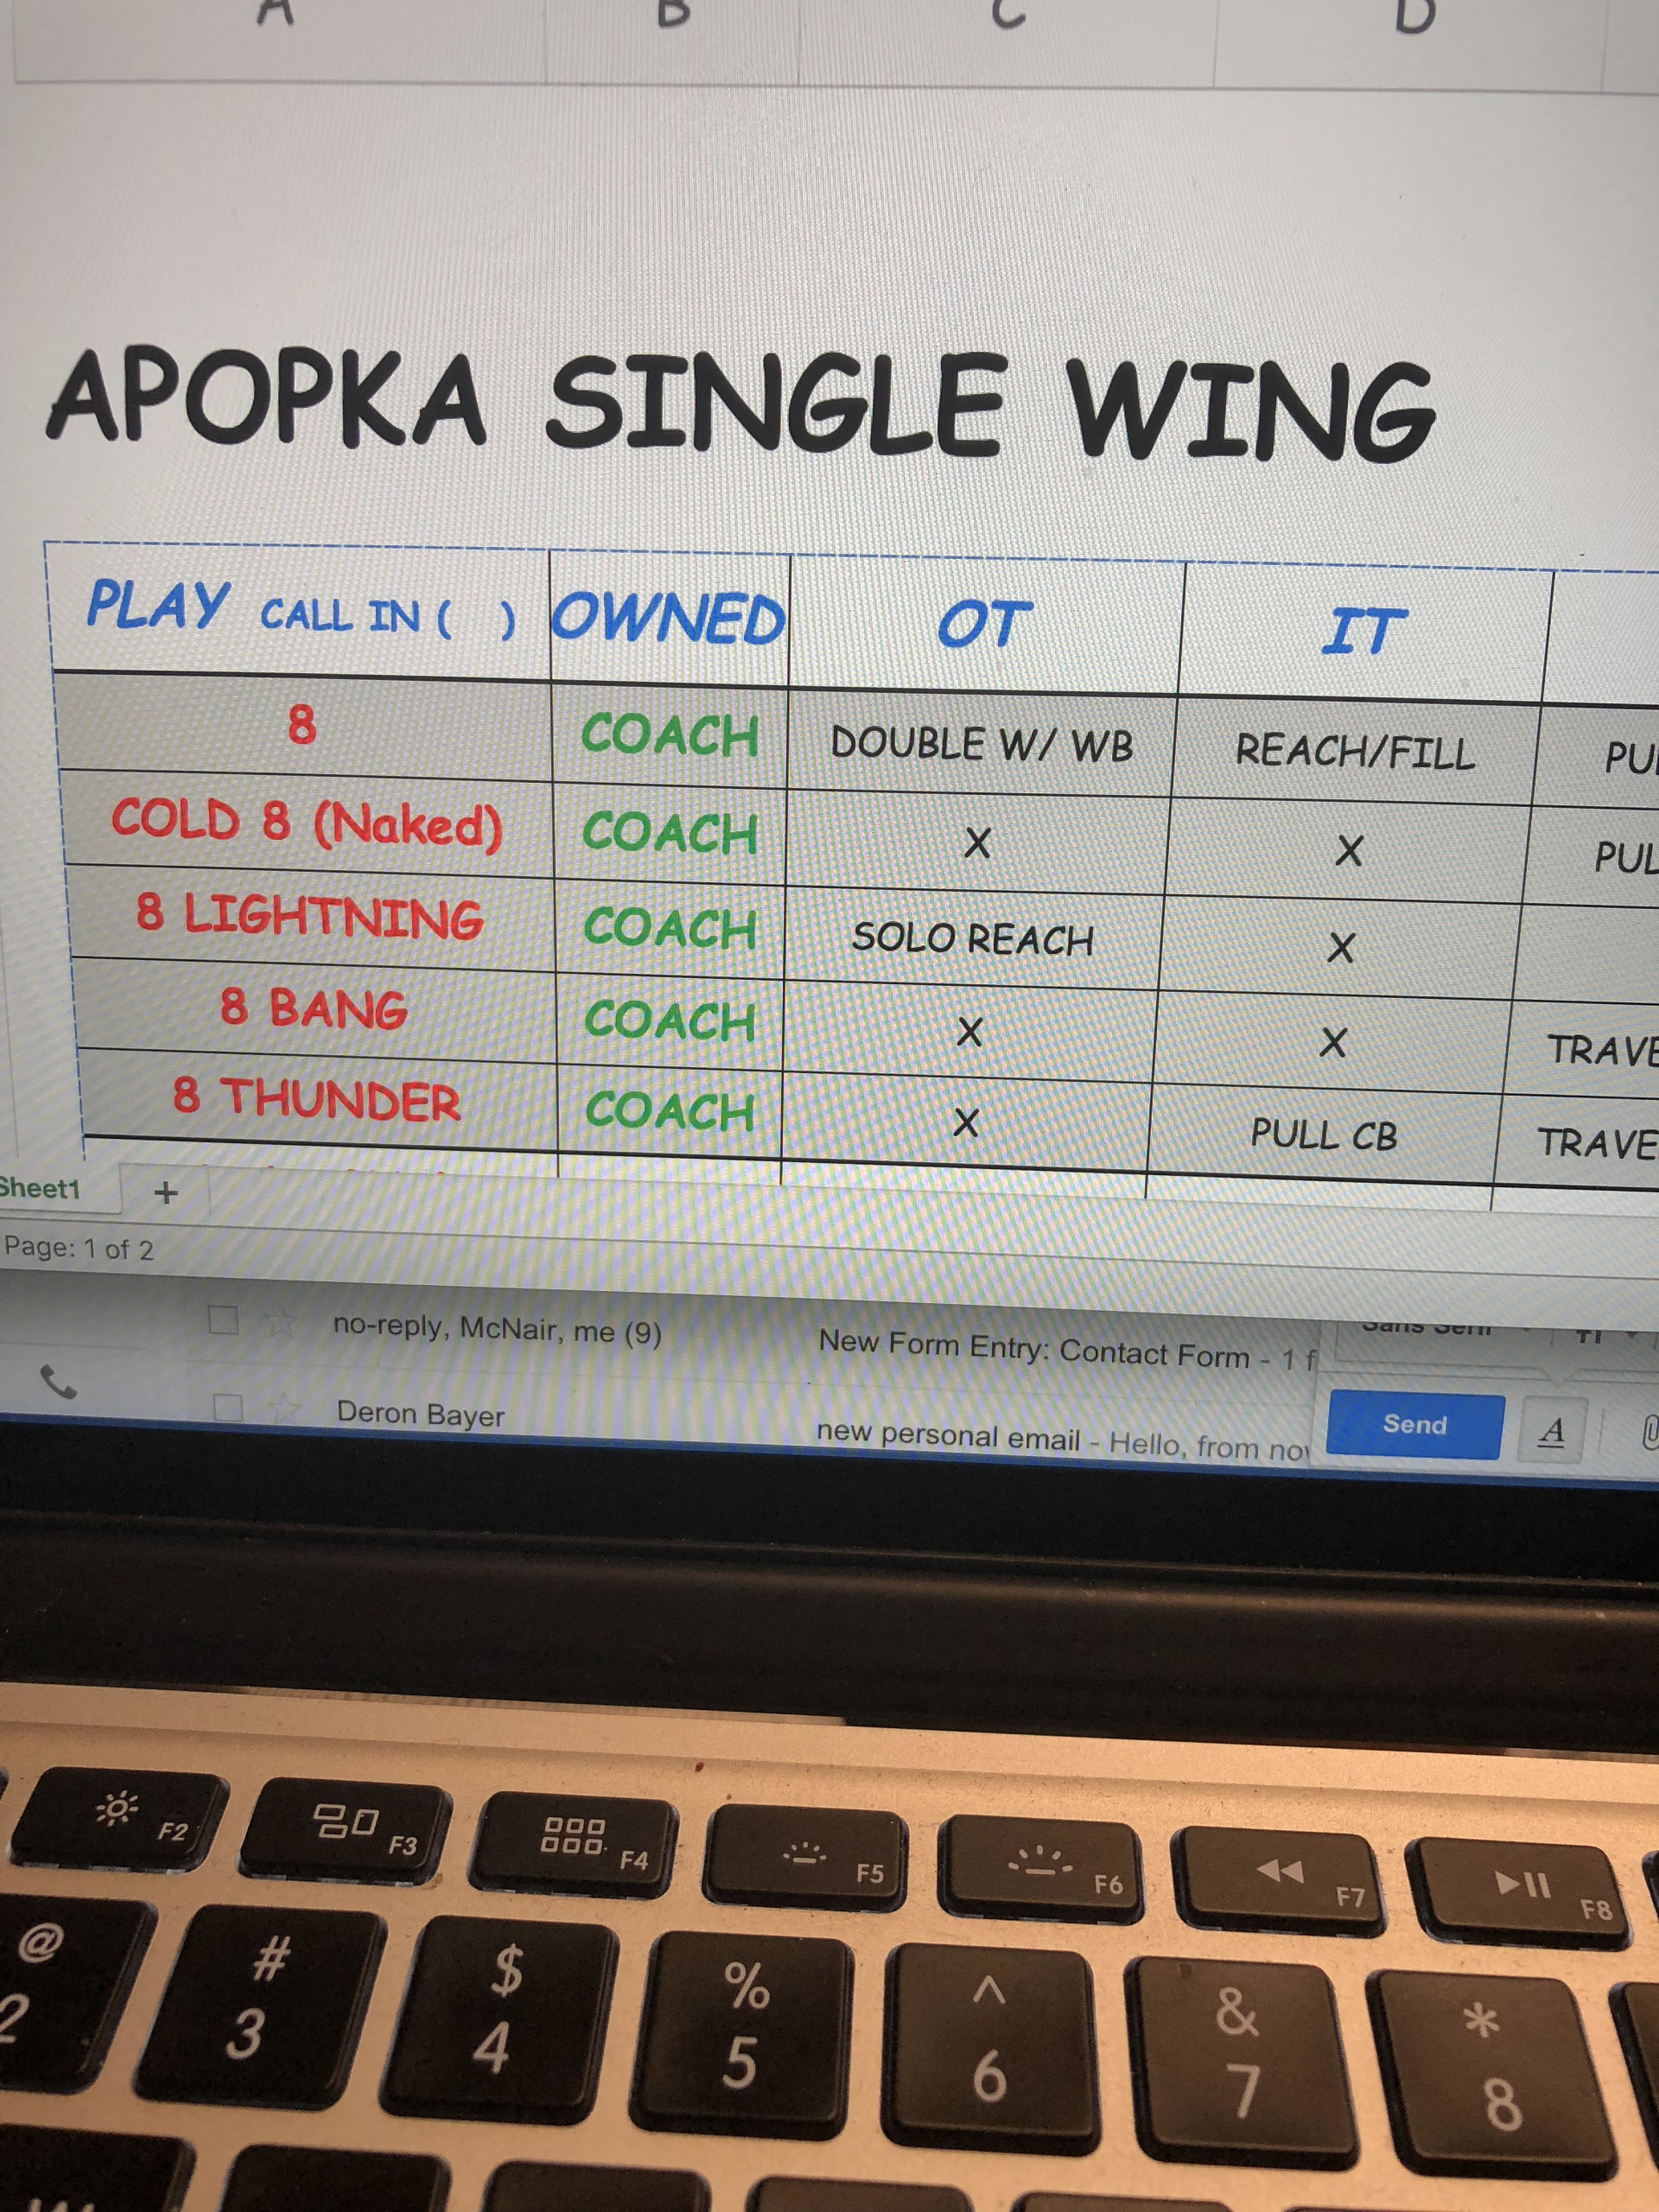 apopka single wing playbook